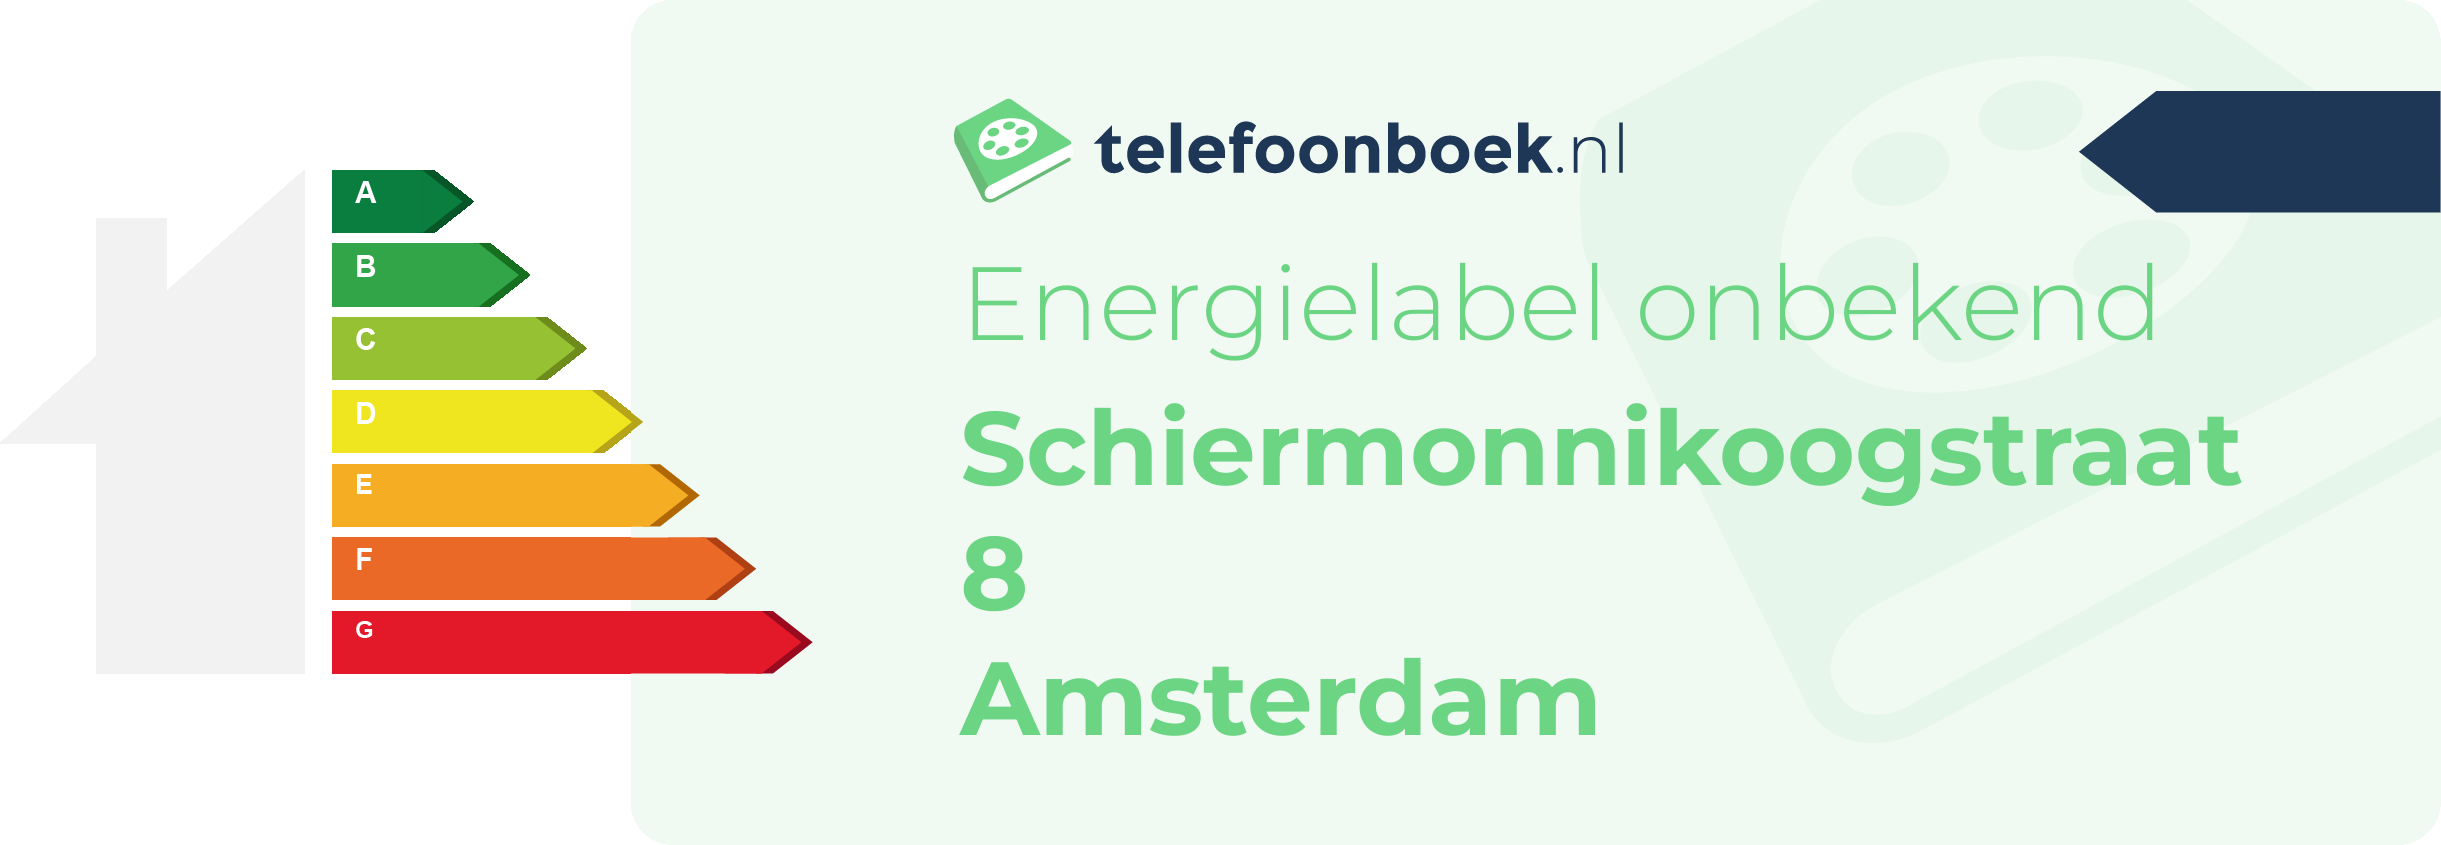 Energielabel Schiermonnikoogstraat 8 Amsterdam